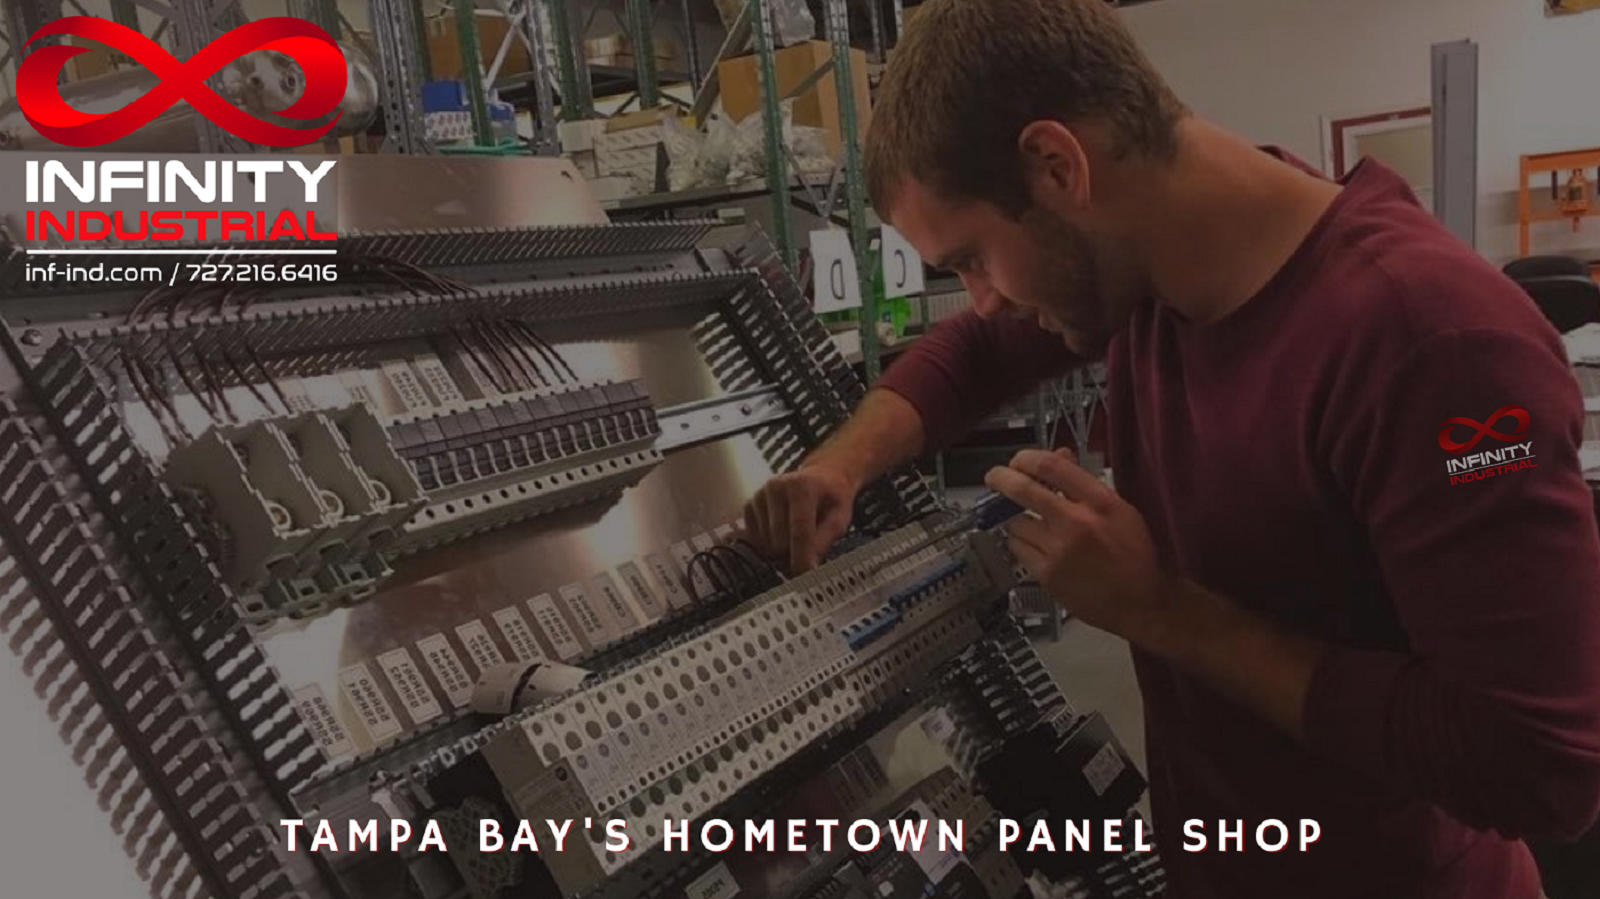 Tampa Bay's panel shop image